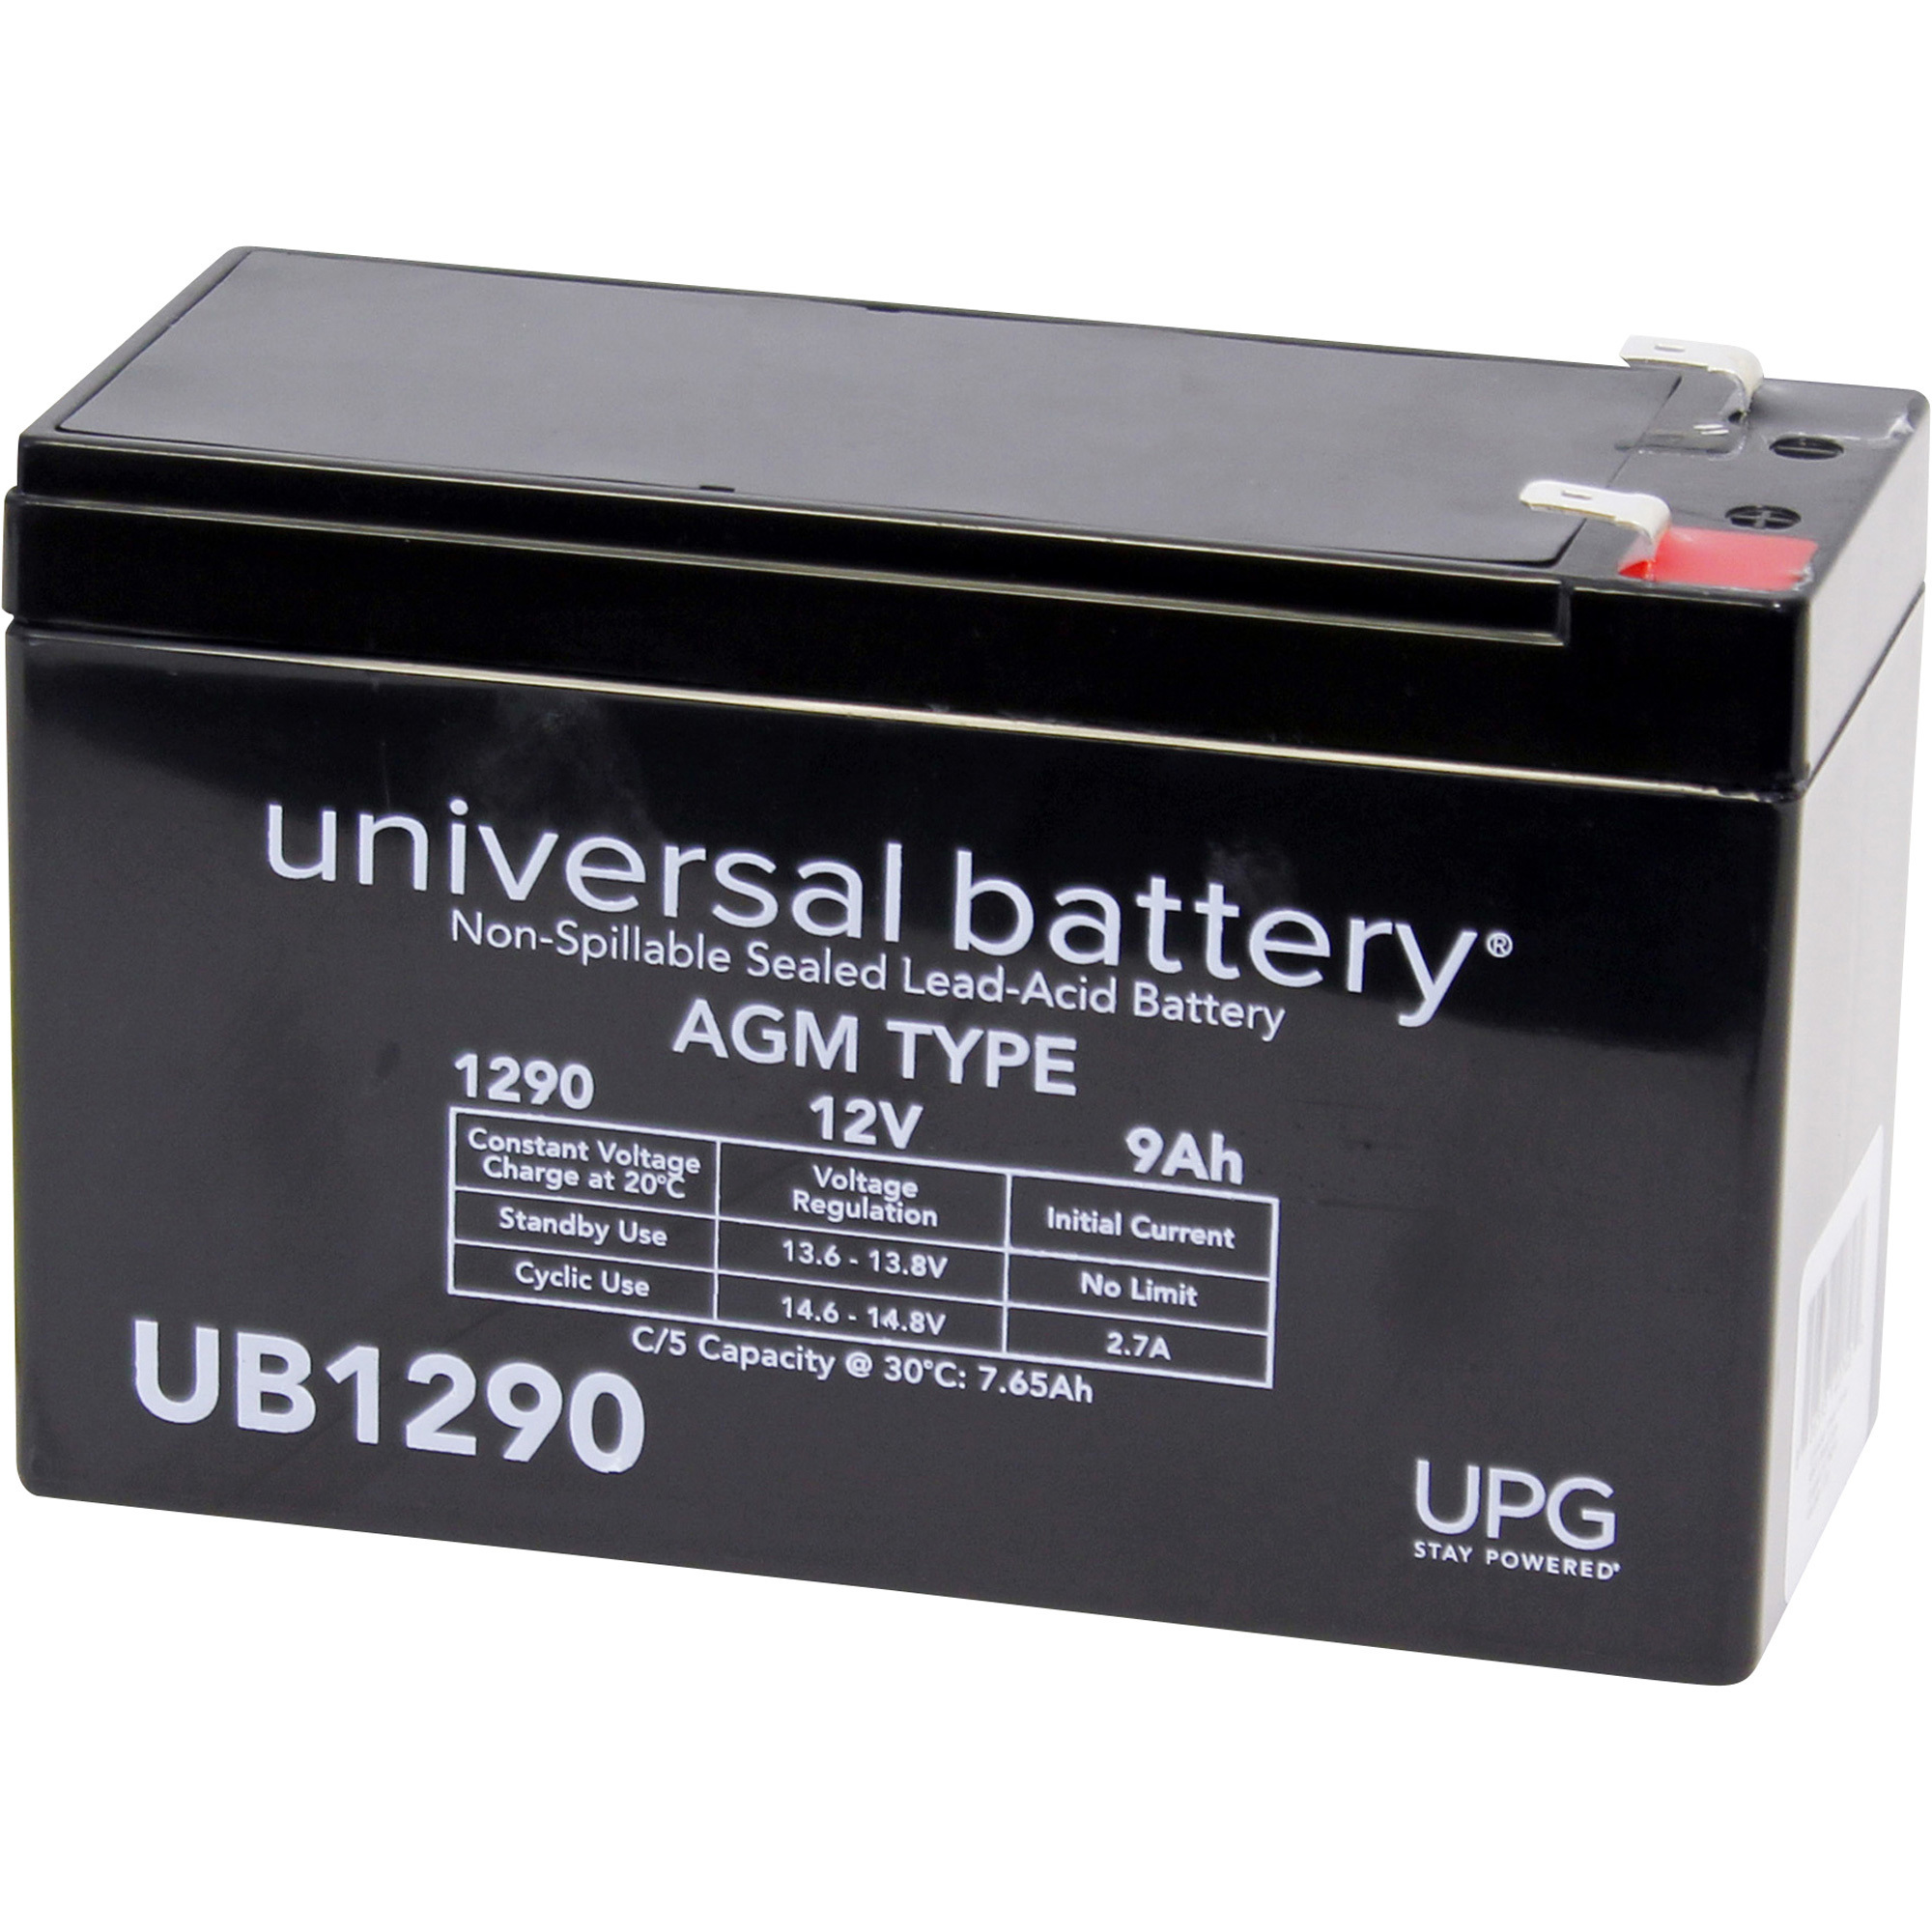 UPG Universal Sealed Lead-Acid Battery, AGM-type, 12V, 9 Amps, Model UB1290